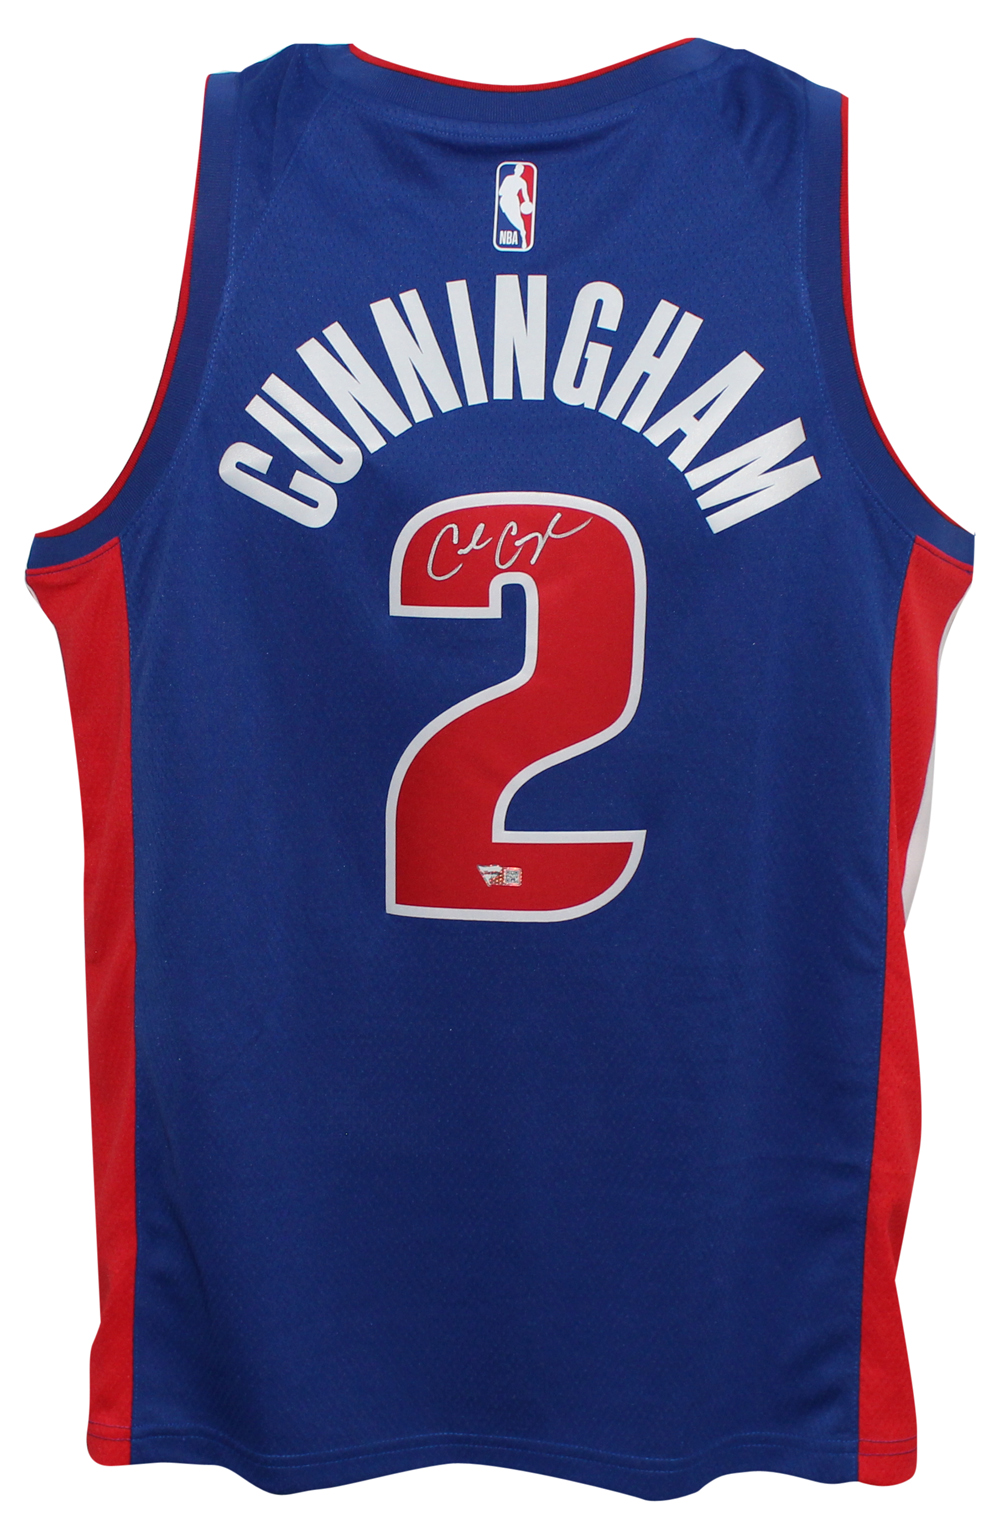 Cade Cunningham Autographed/Signed Detroit Pistons Jersey Fanatics